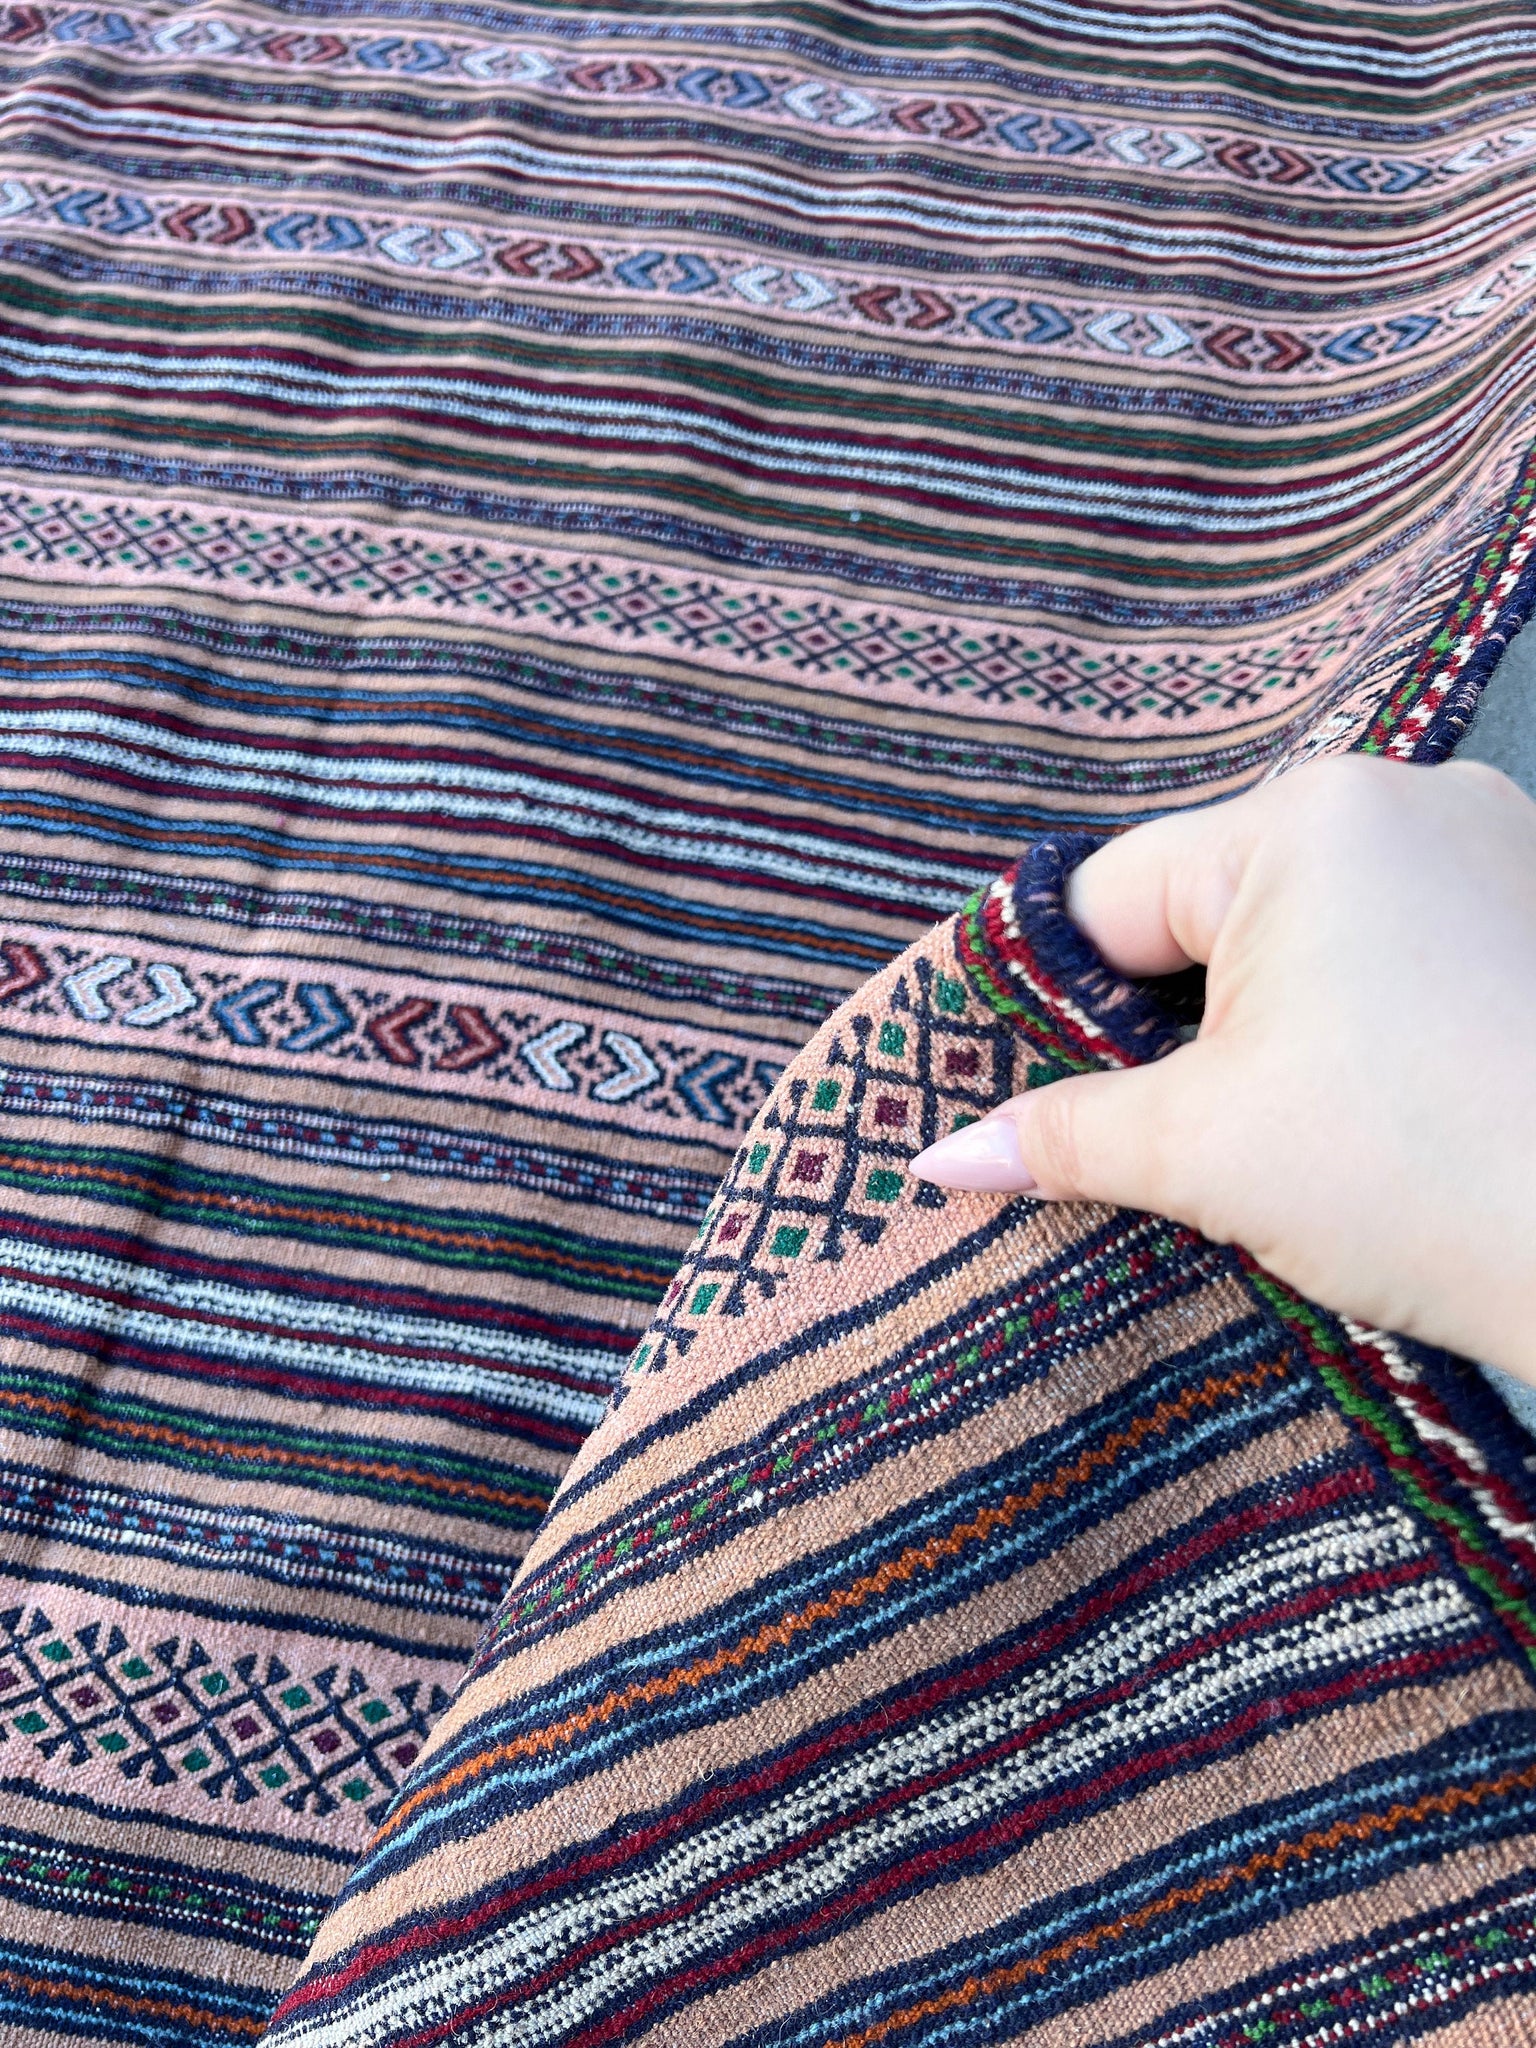 5x7 (150x215) Handmade Afghan Kilim Rug | Taupe Mocha Brown Red Blue Lime Green Orange Ivory | Geometric Wool Persian Tribal Hand Knotted